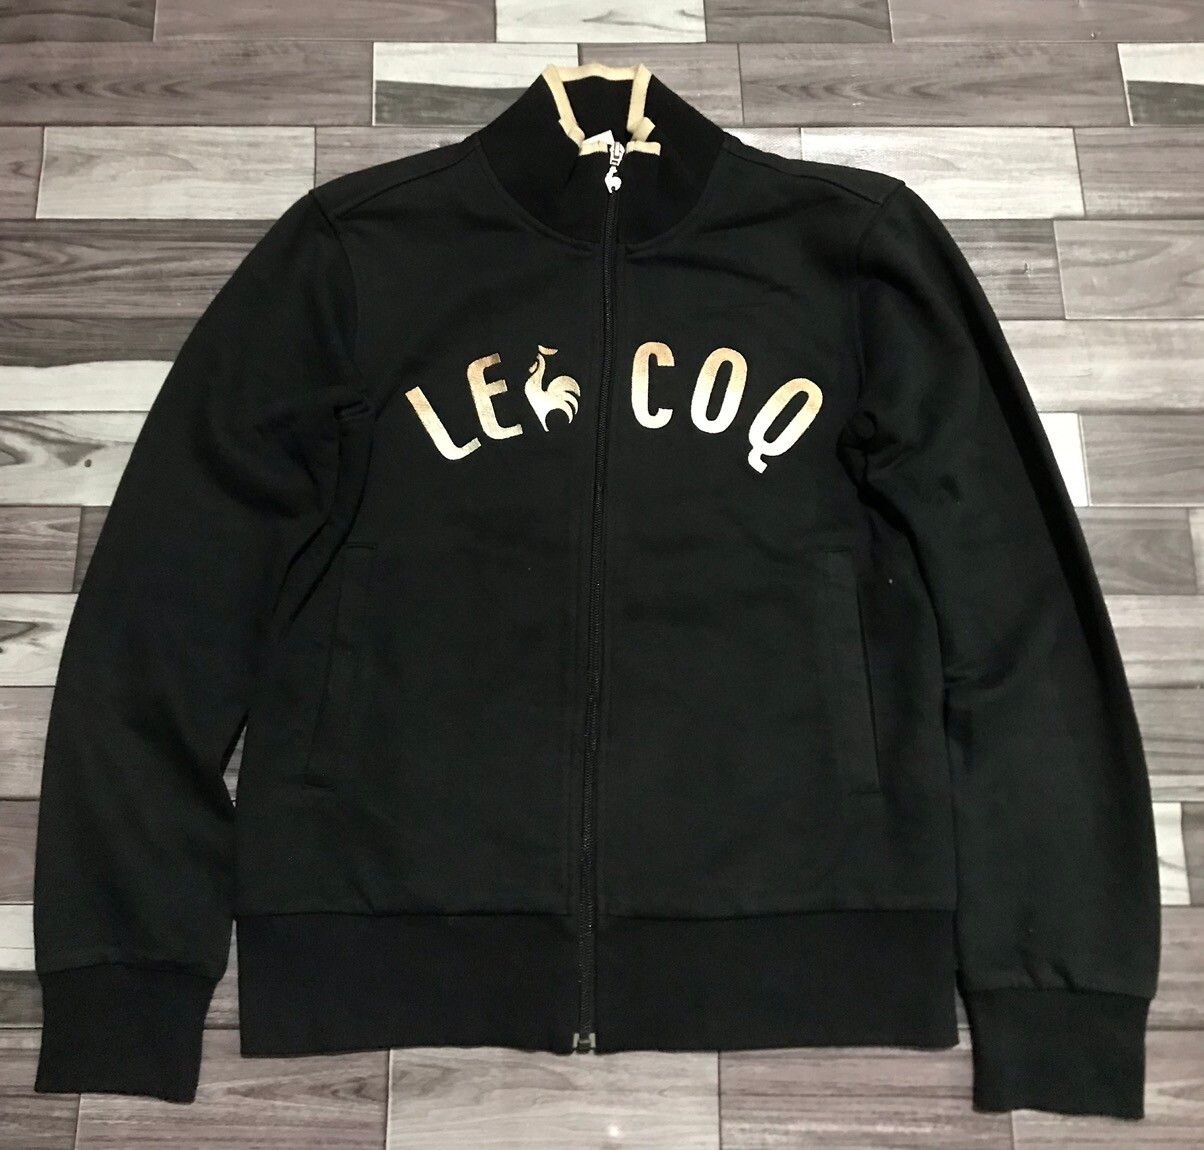 Le Coq Sportif - Lecoq Sportif Spellout Sweater Jacket -R9 - 1